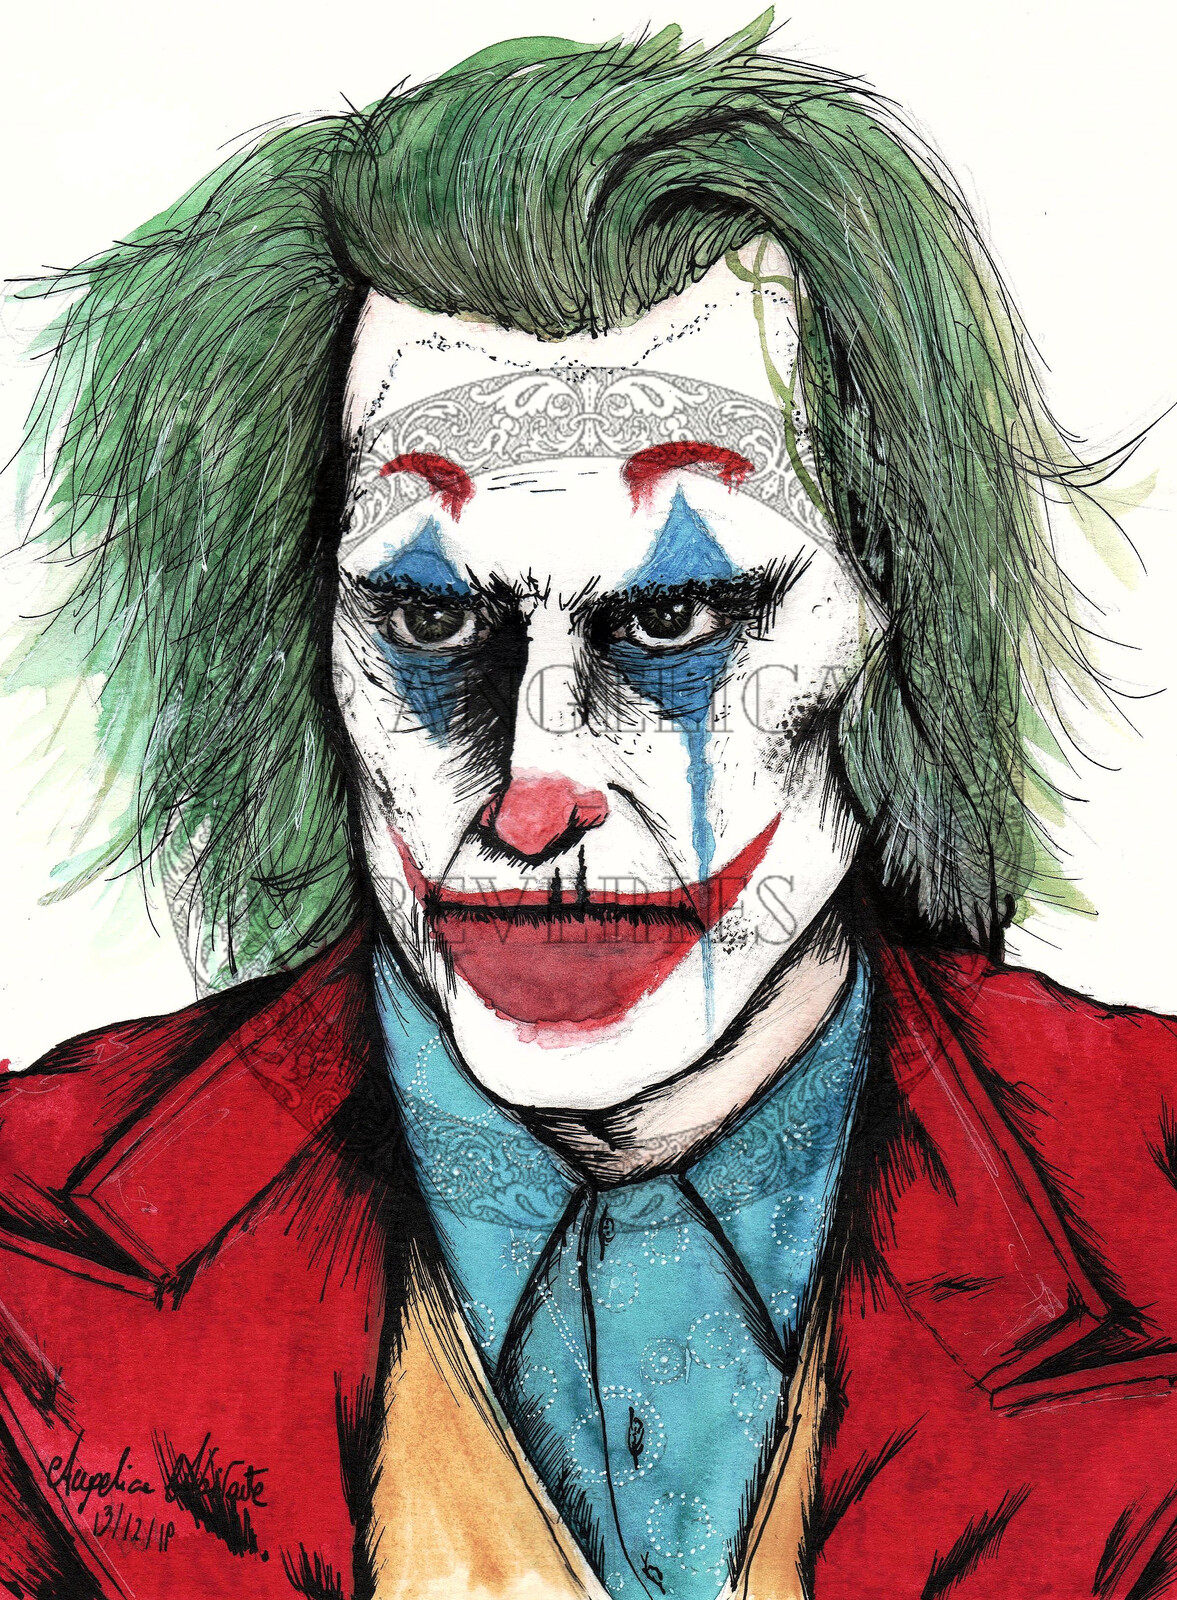 "The Joker"
Portrait of J. Phoenix's version
Inks and watercolors on paper